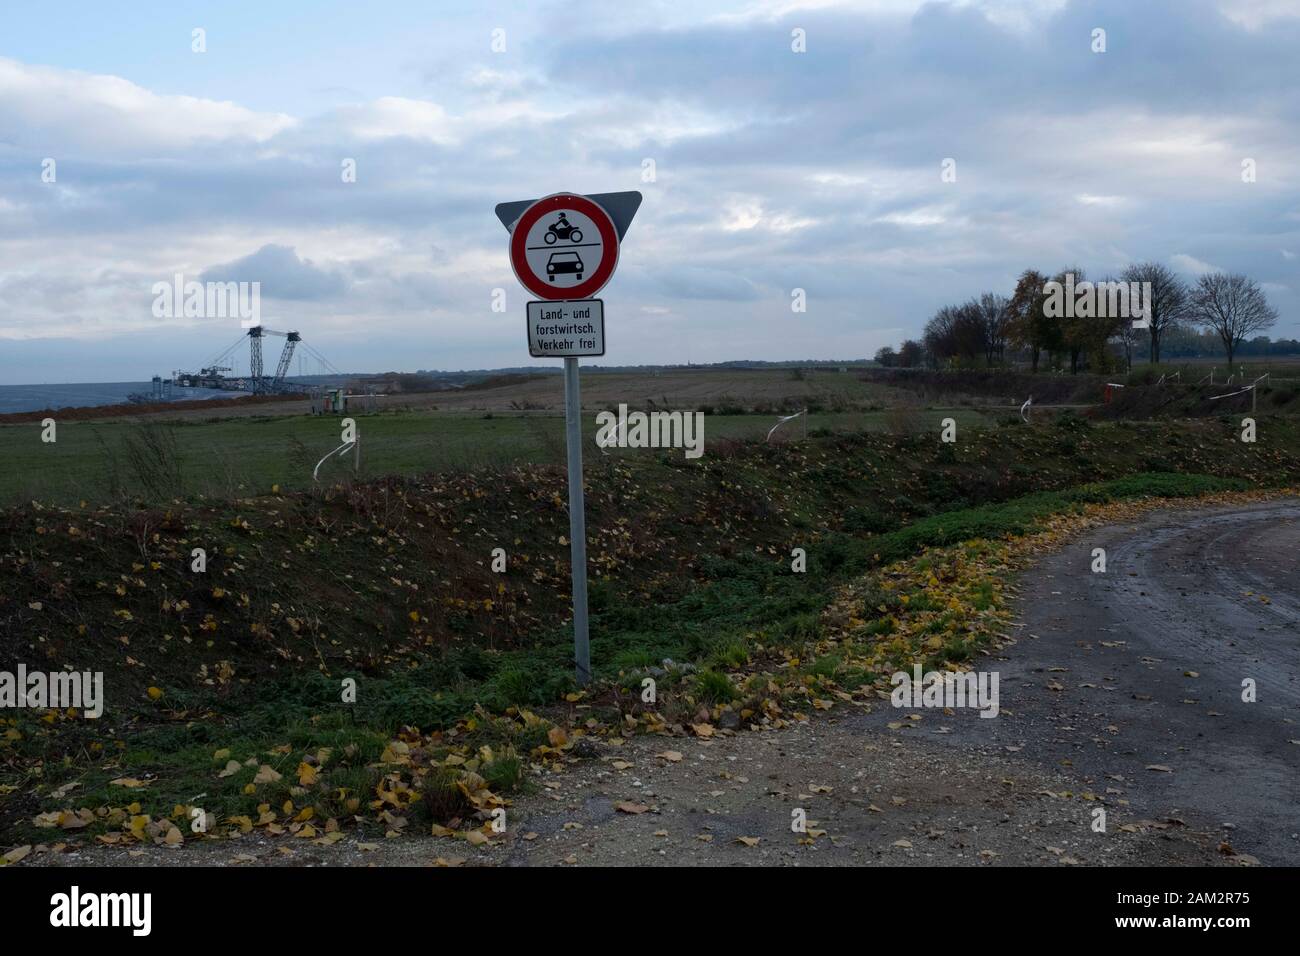 Road sign near open pit coal mine, bucket wheel excavator in background, Garzweiller, Germany Stock Photo